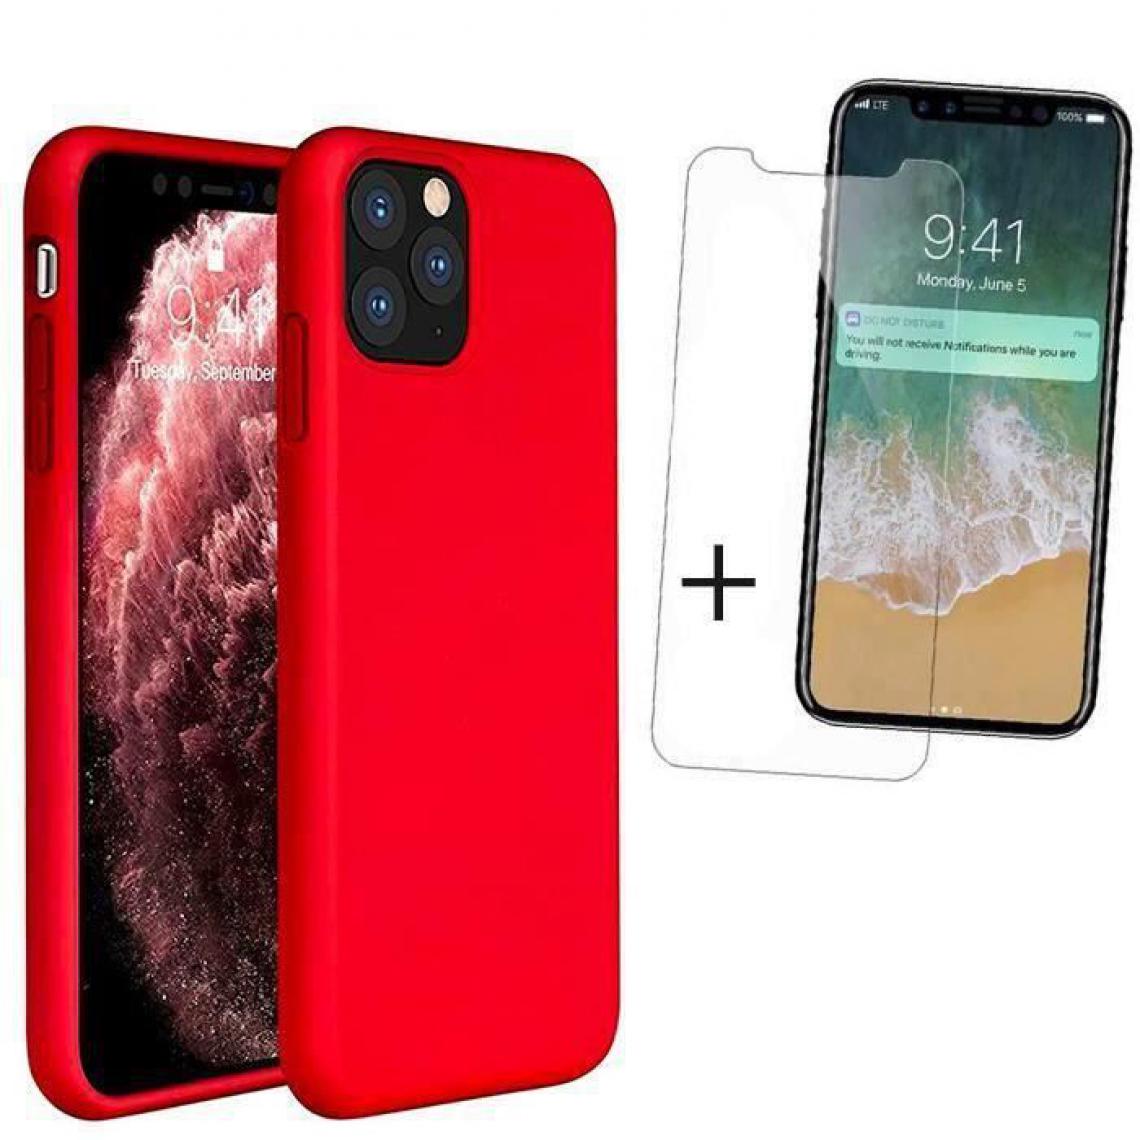 Tikawi - Tikawi Coque Iphone 12 Pro MAX (6.7") Silicone Rouge + Verre trempé Tikawi [Gel Souple] [Haute Protection] [Anti-Rayure] - Coque, étui smartphone